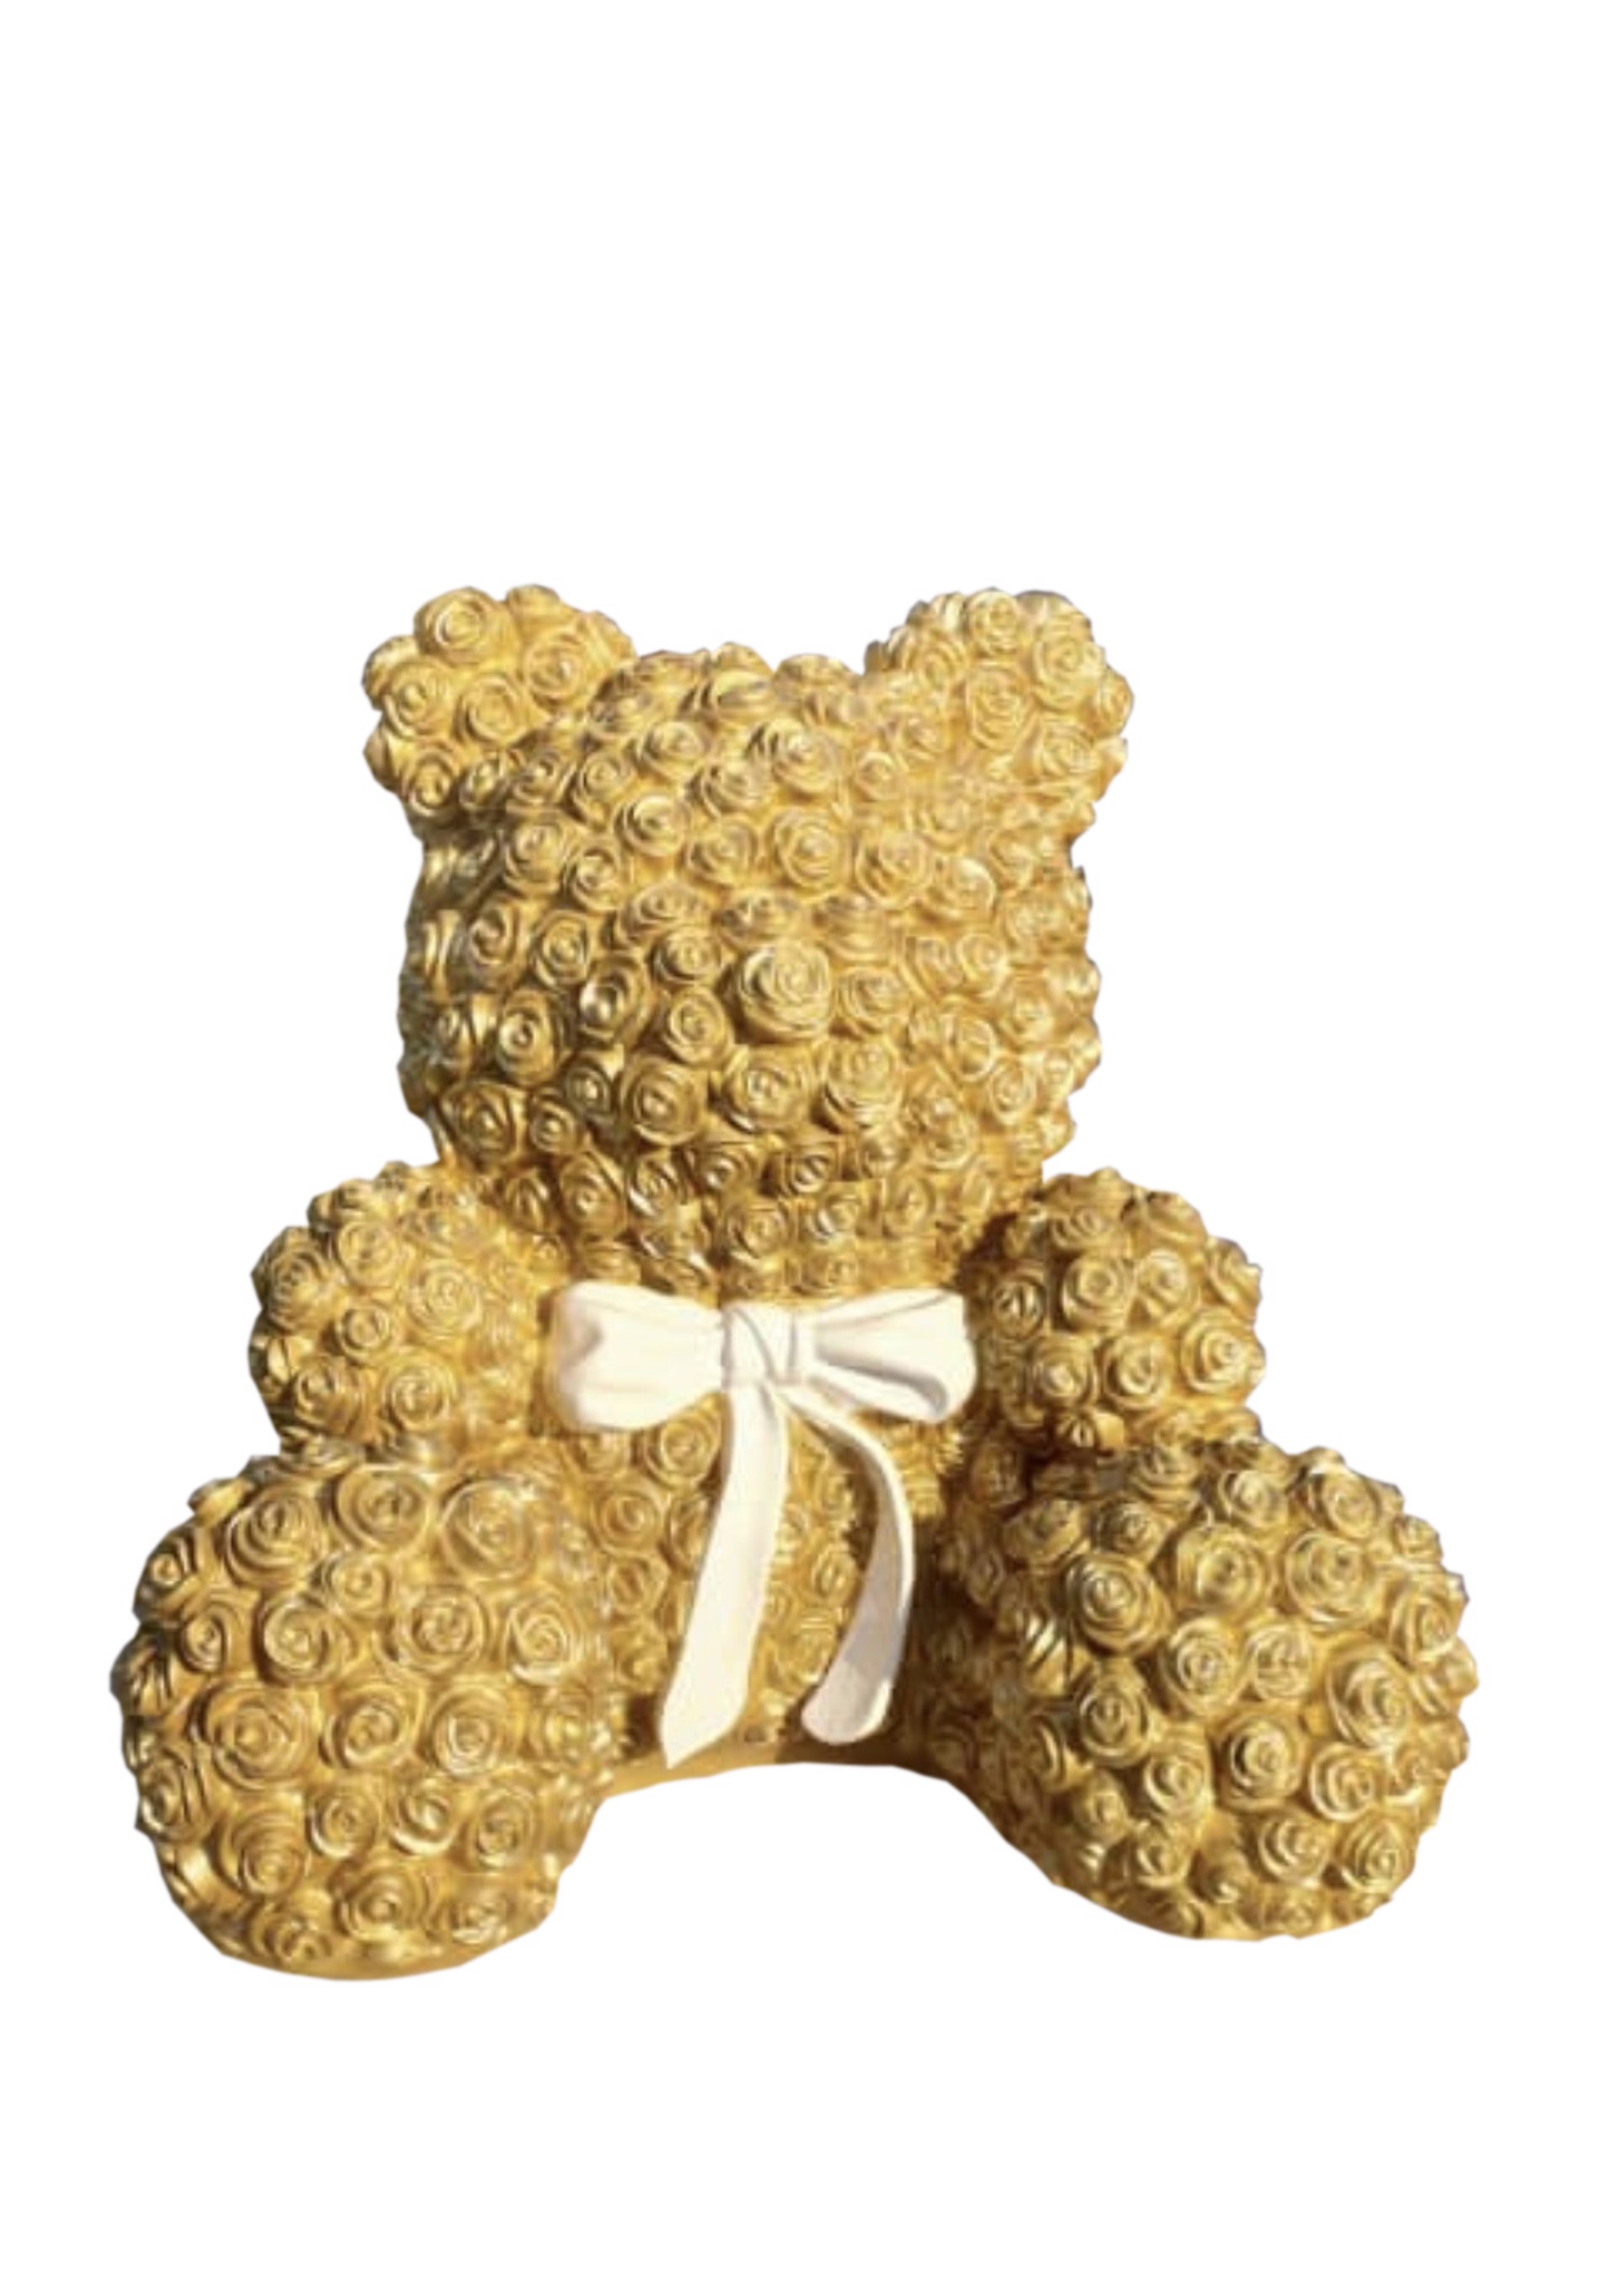 Small Gold Flower Bear by Flower Bears Sculptures by Elena Bulatova